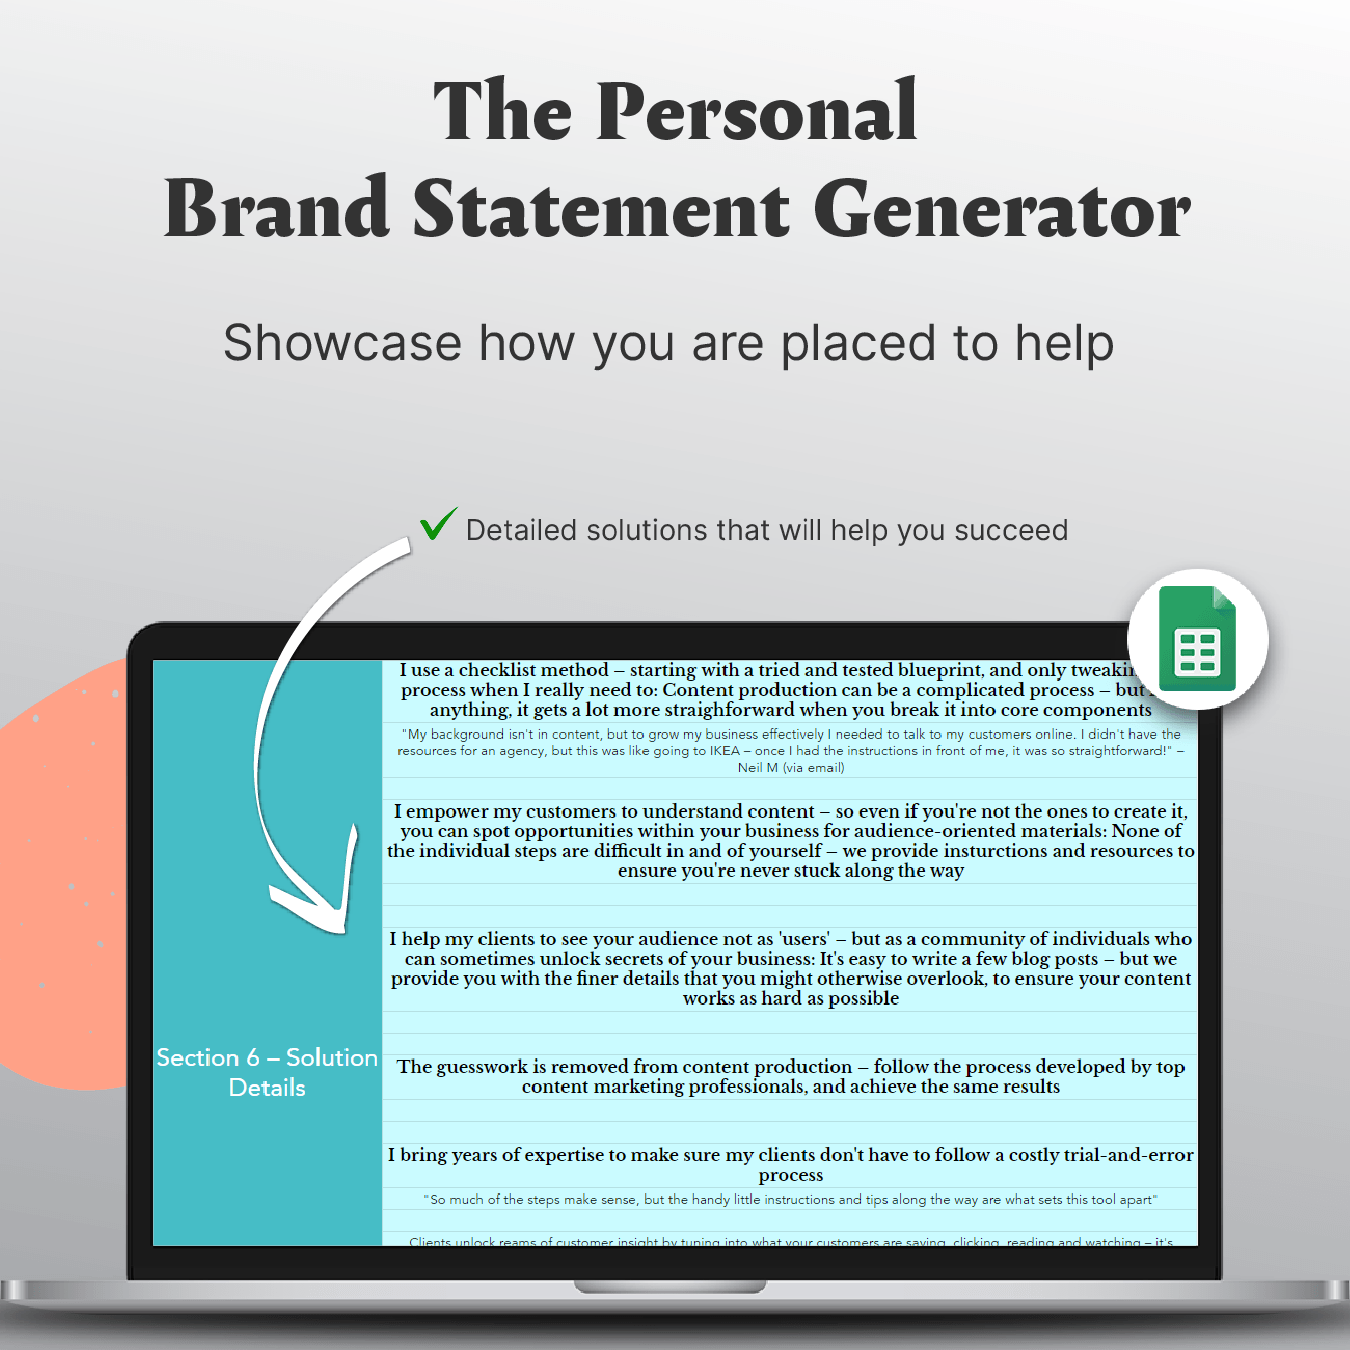 The Personal Brand Statement Generator